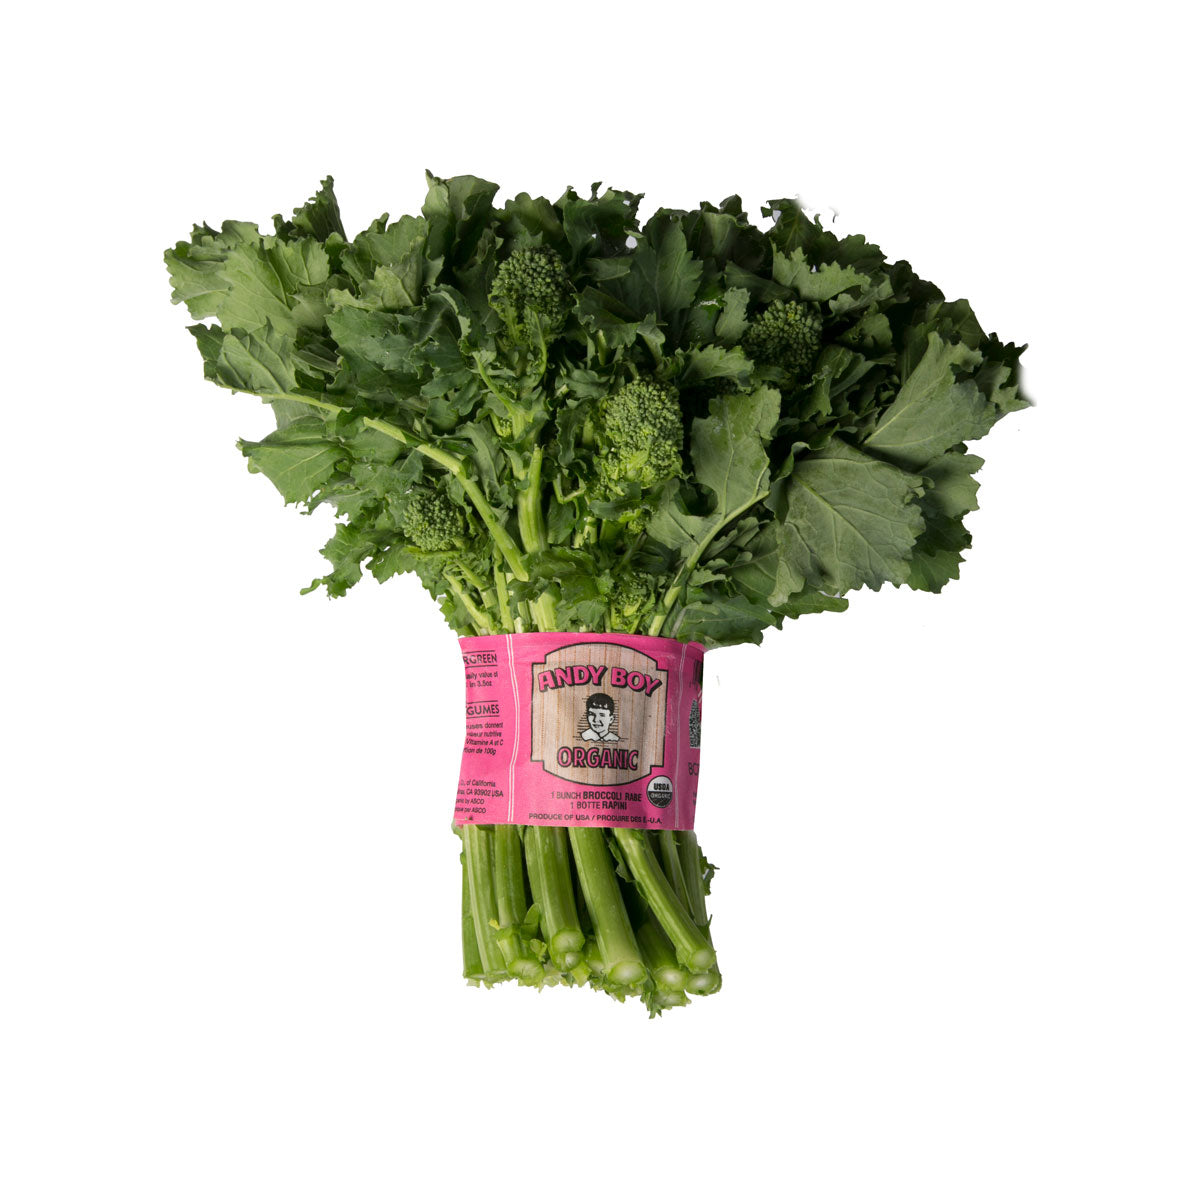 D'Arrigo Organic Andy Boy Broccoli Rabe